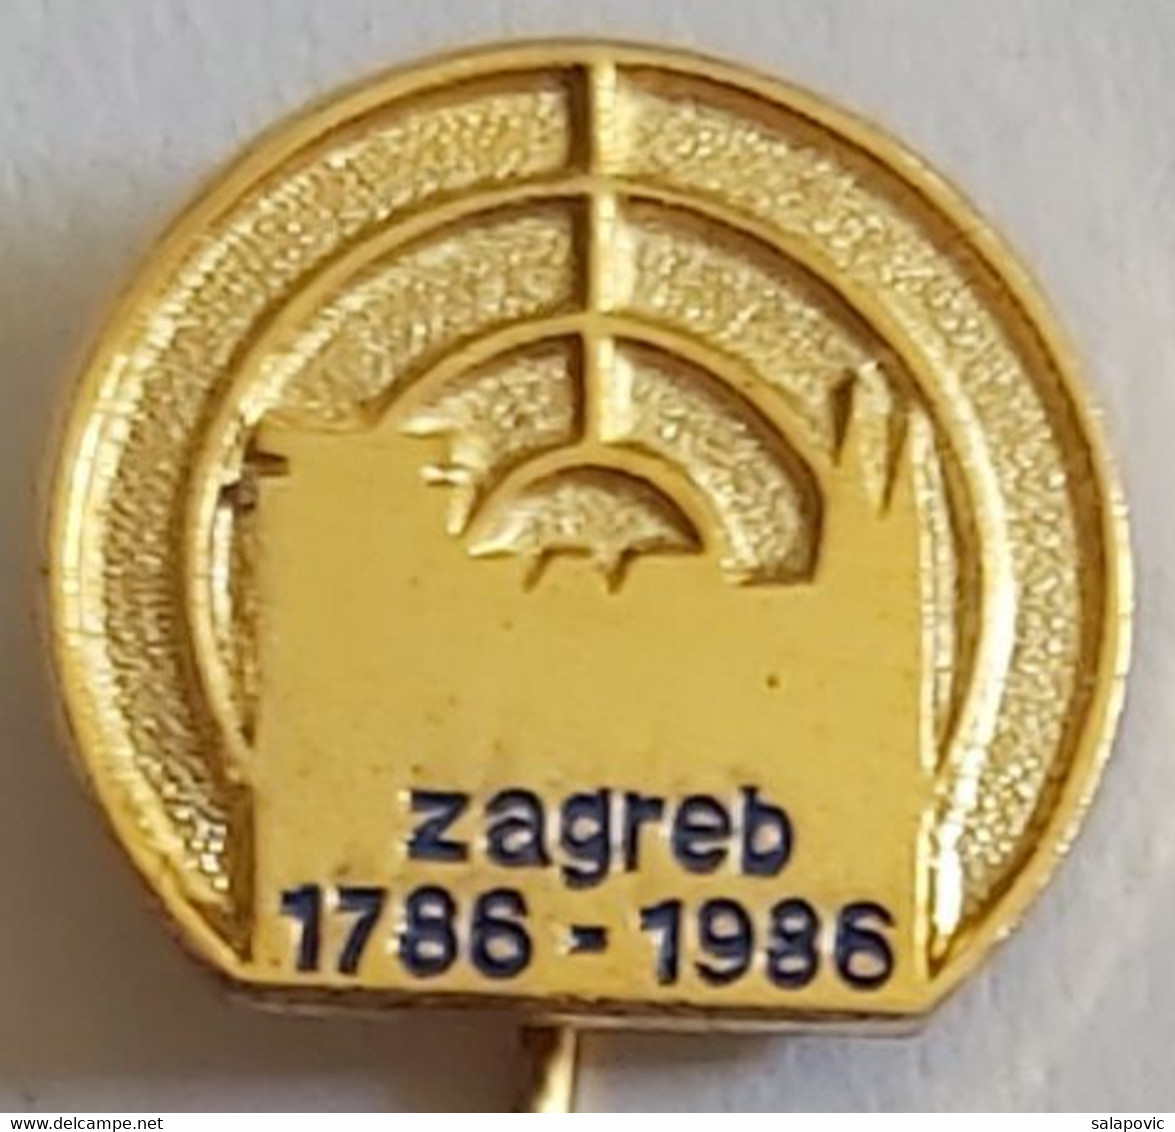 Zagreb 1786 - 1886 Croatia Archery Zagreb Shooting Association PIN A6/2 - Archery